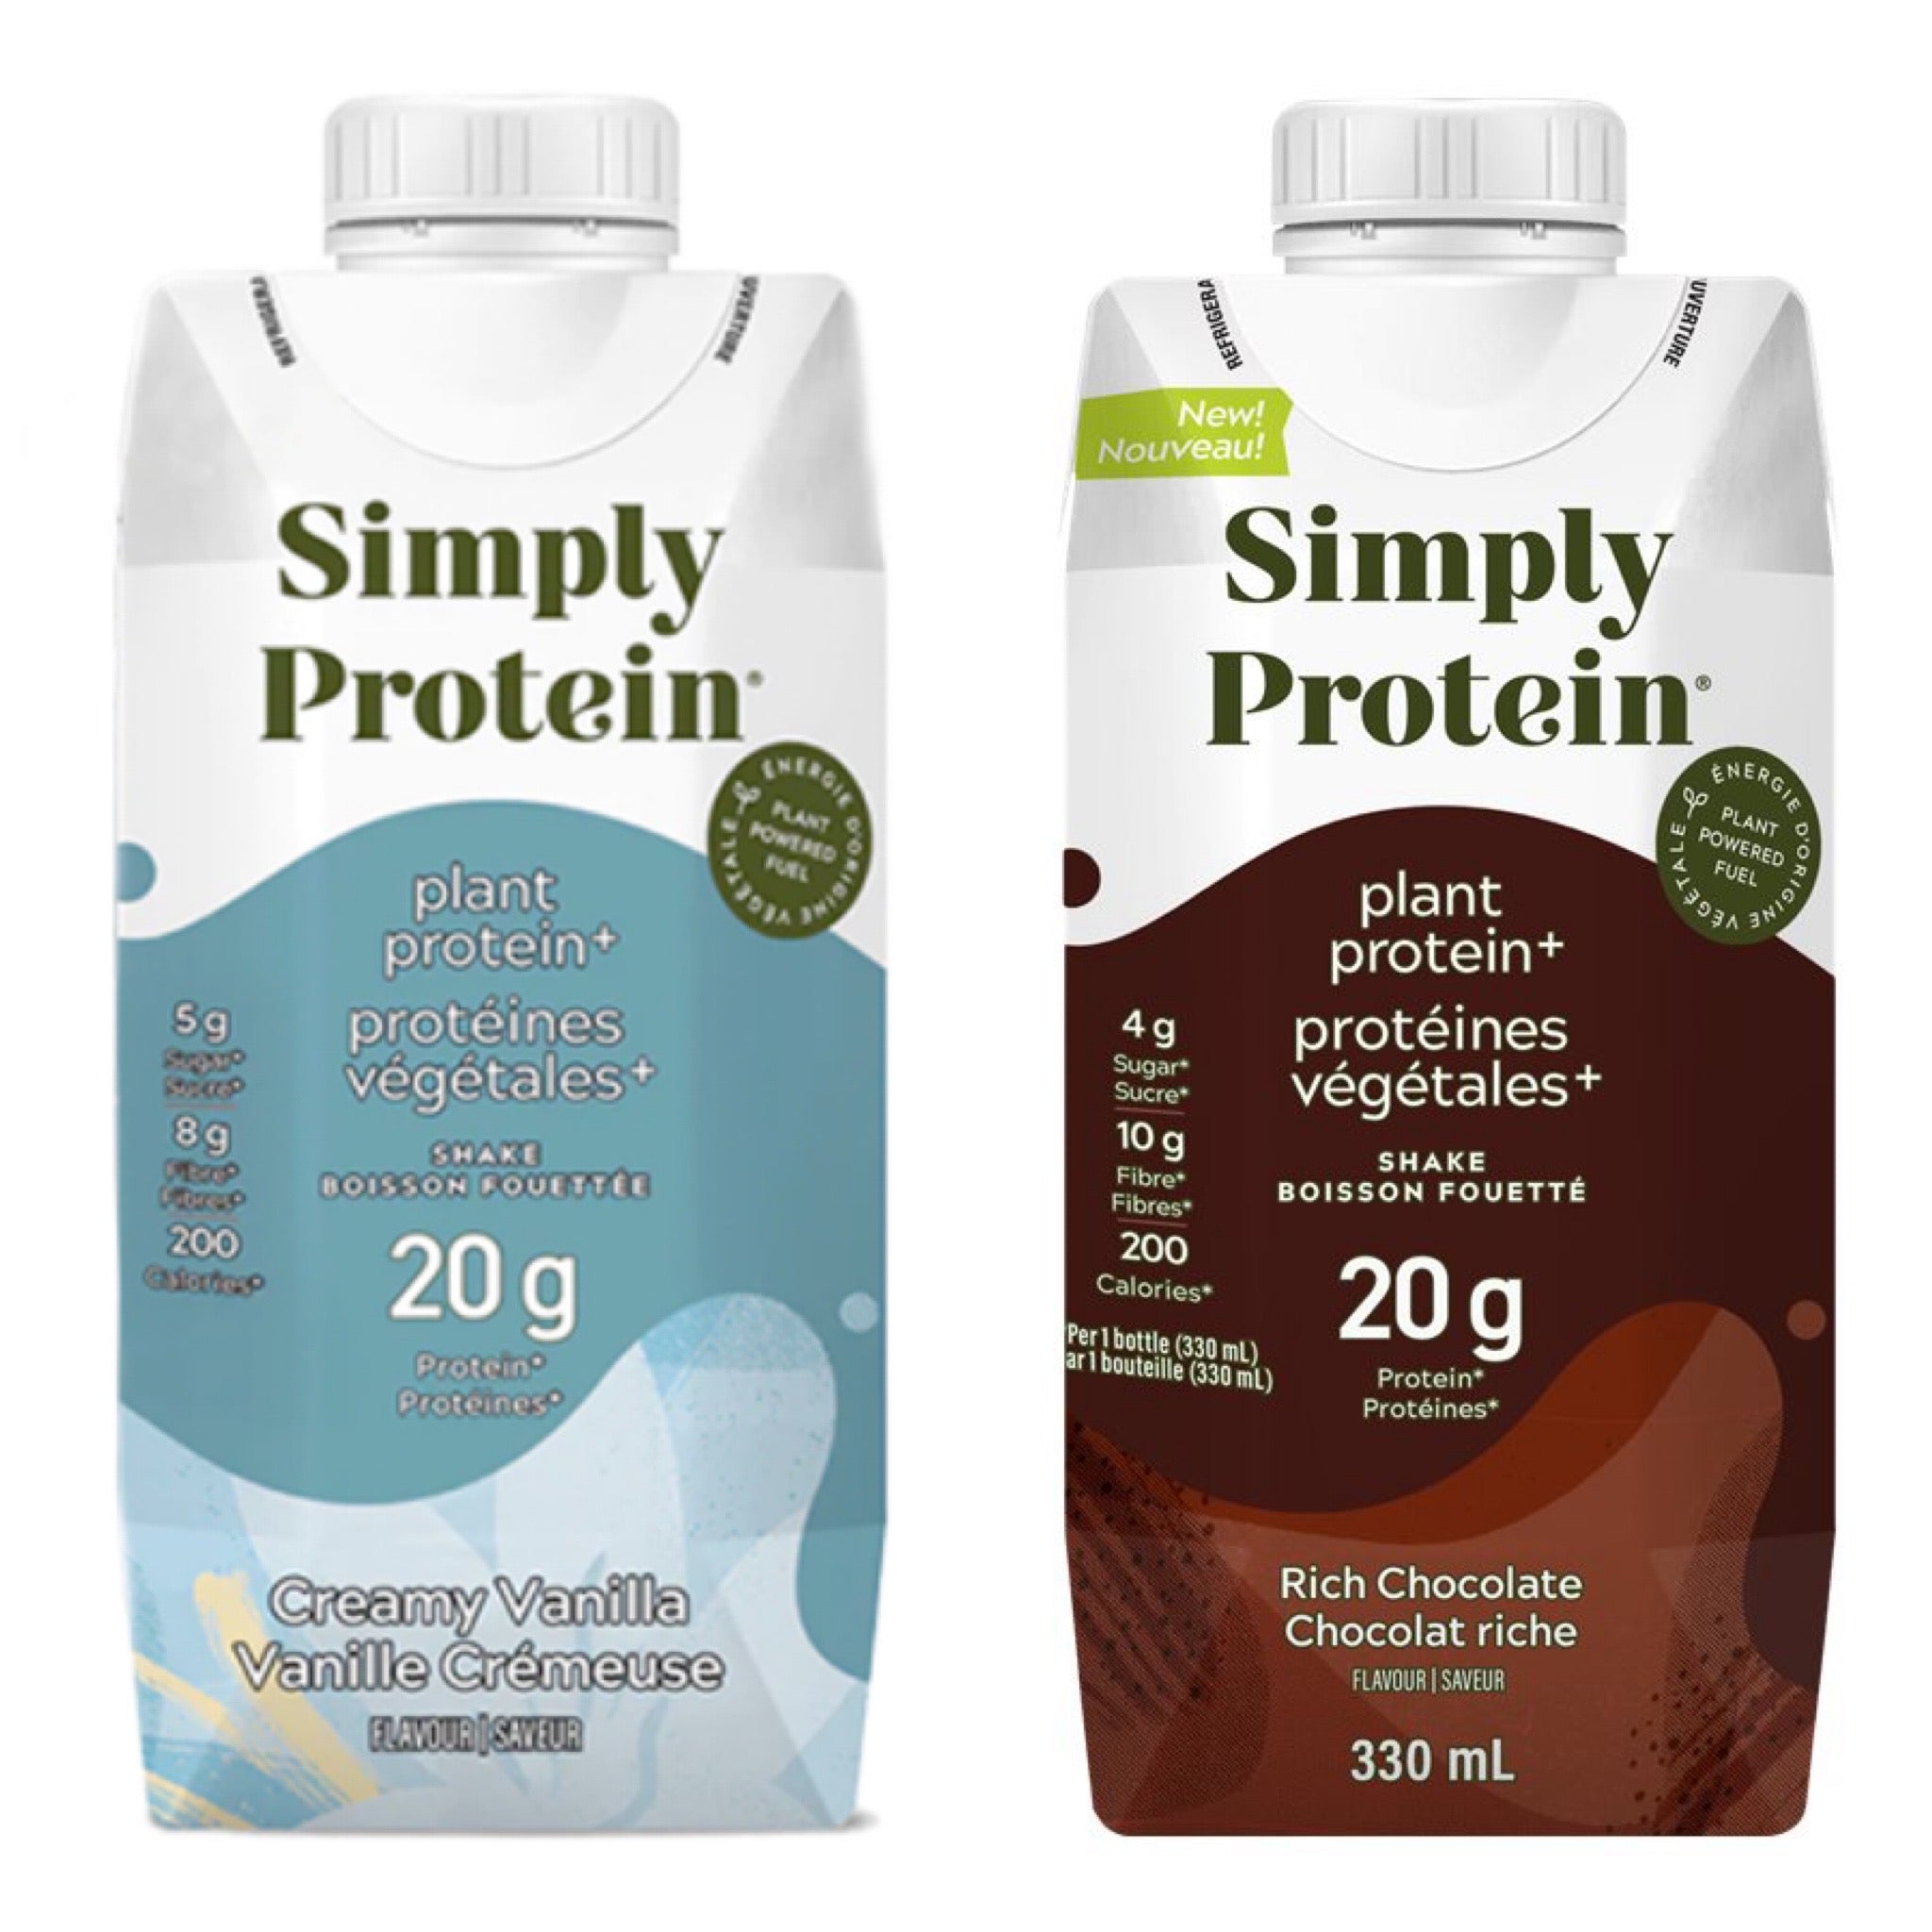 SimplyProtein Plant Protein+ Shake (330 ml) Drink Rich Chocolate,Creamy Vanilla SimplyProtein